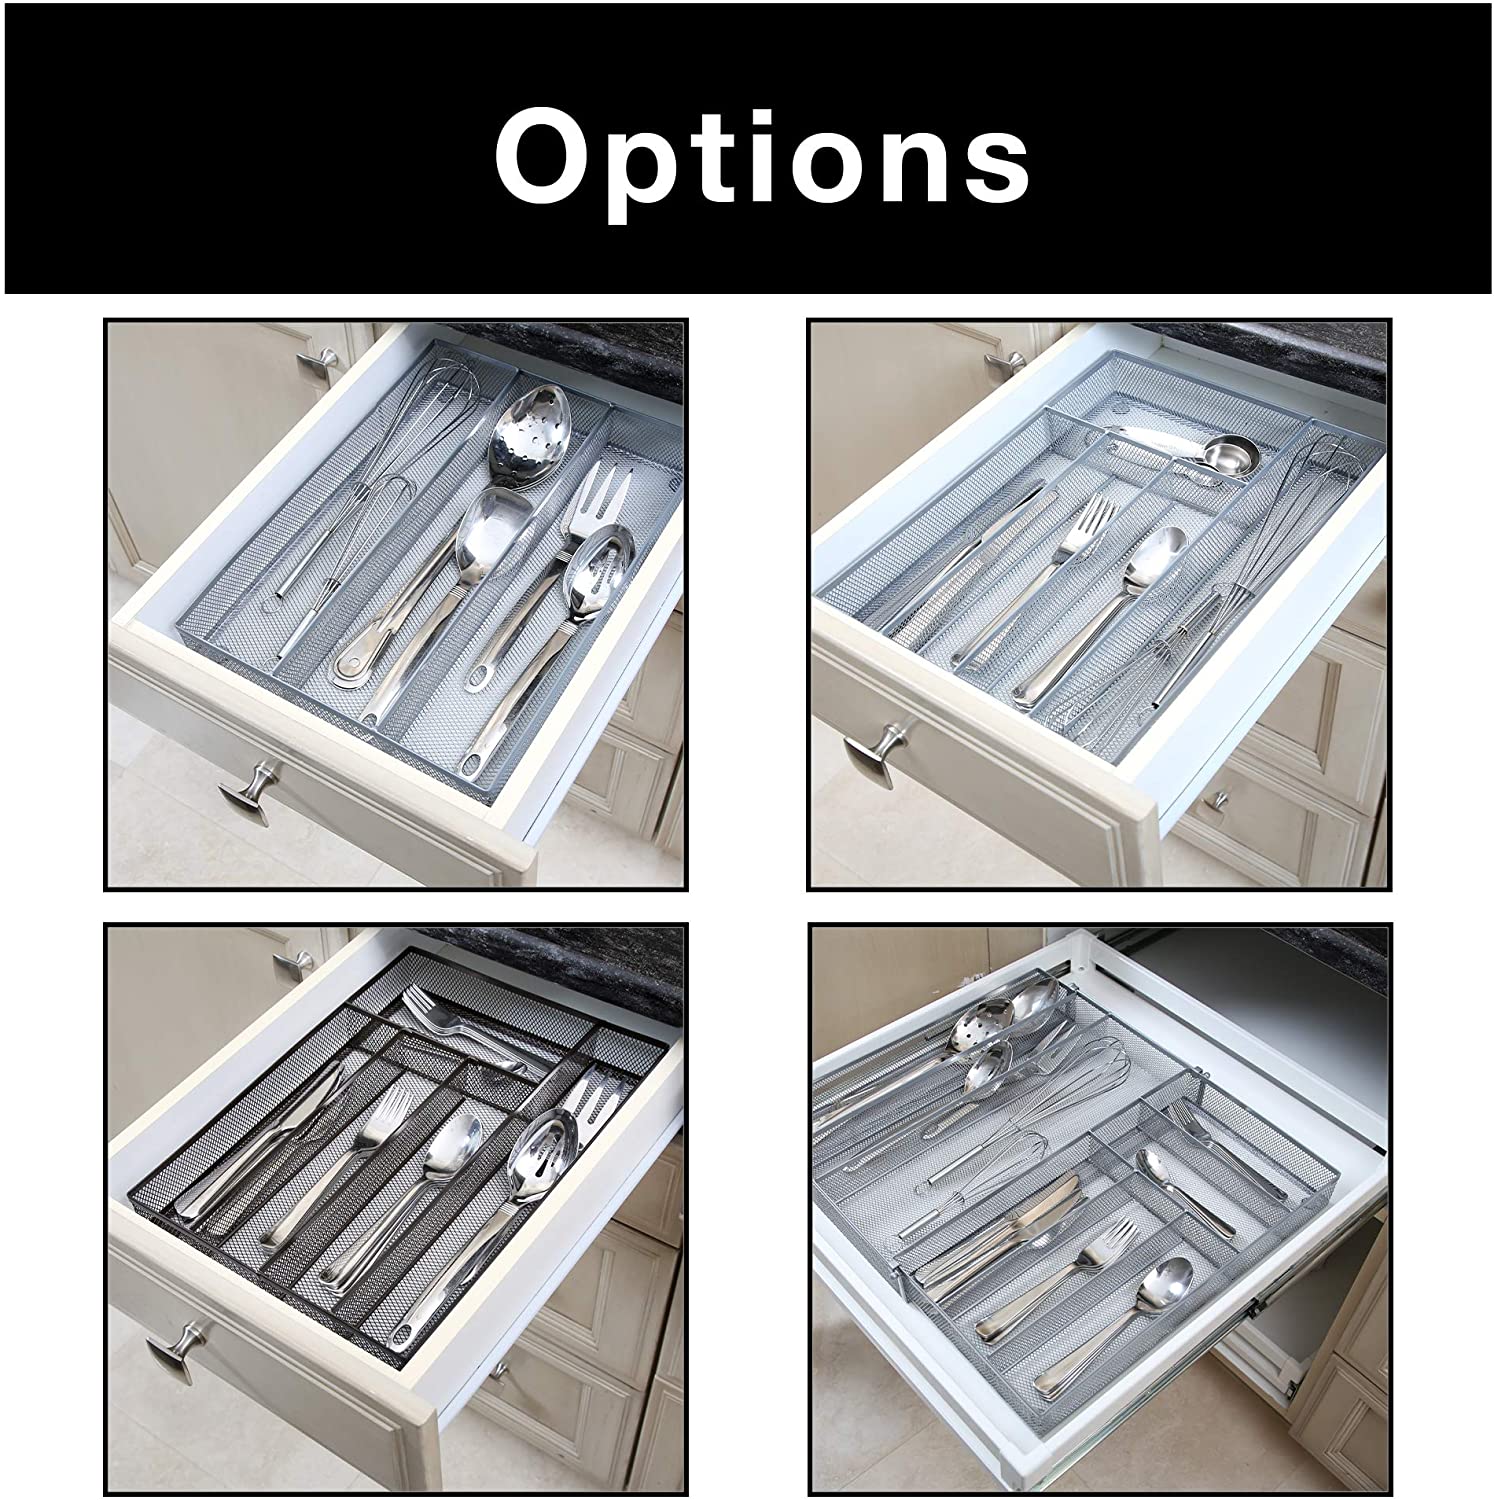 3-Compartment Mesh Drawer Organizer - Silver - Smart Design® 6